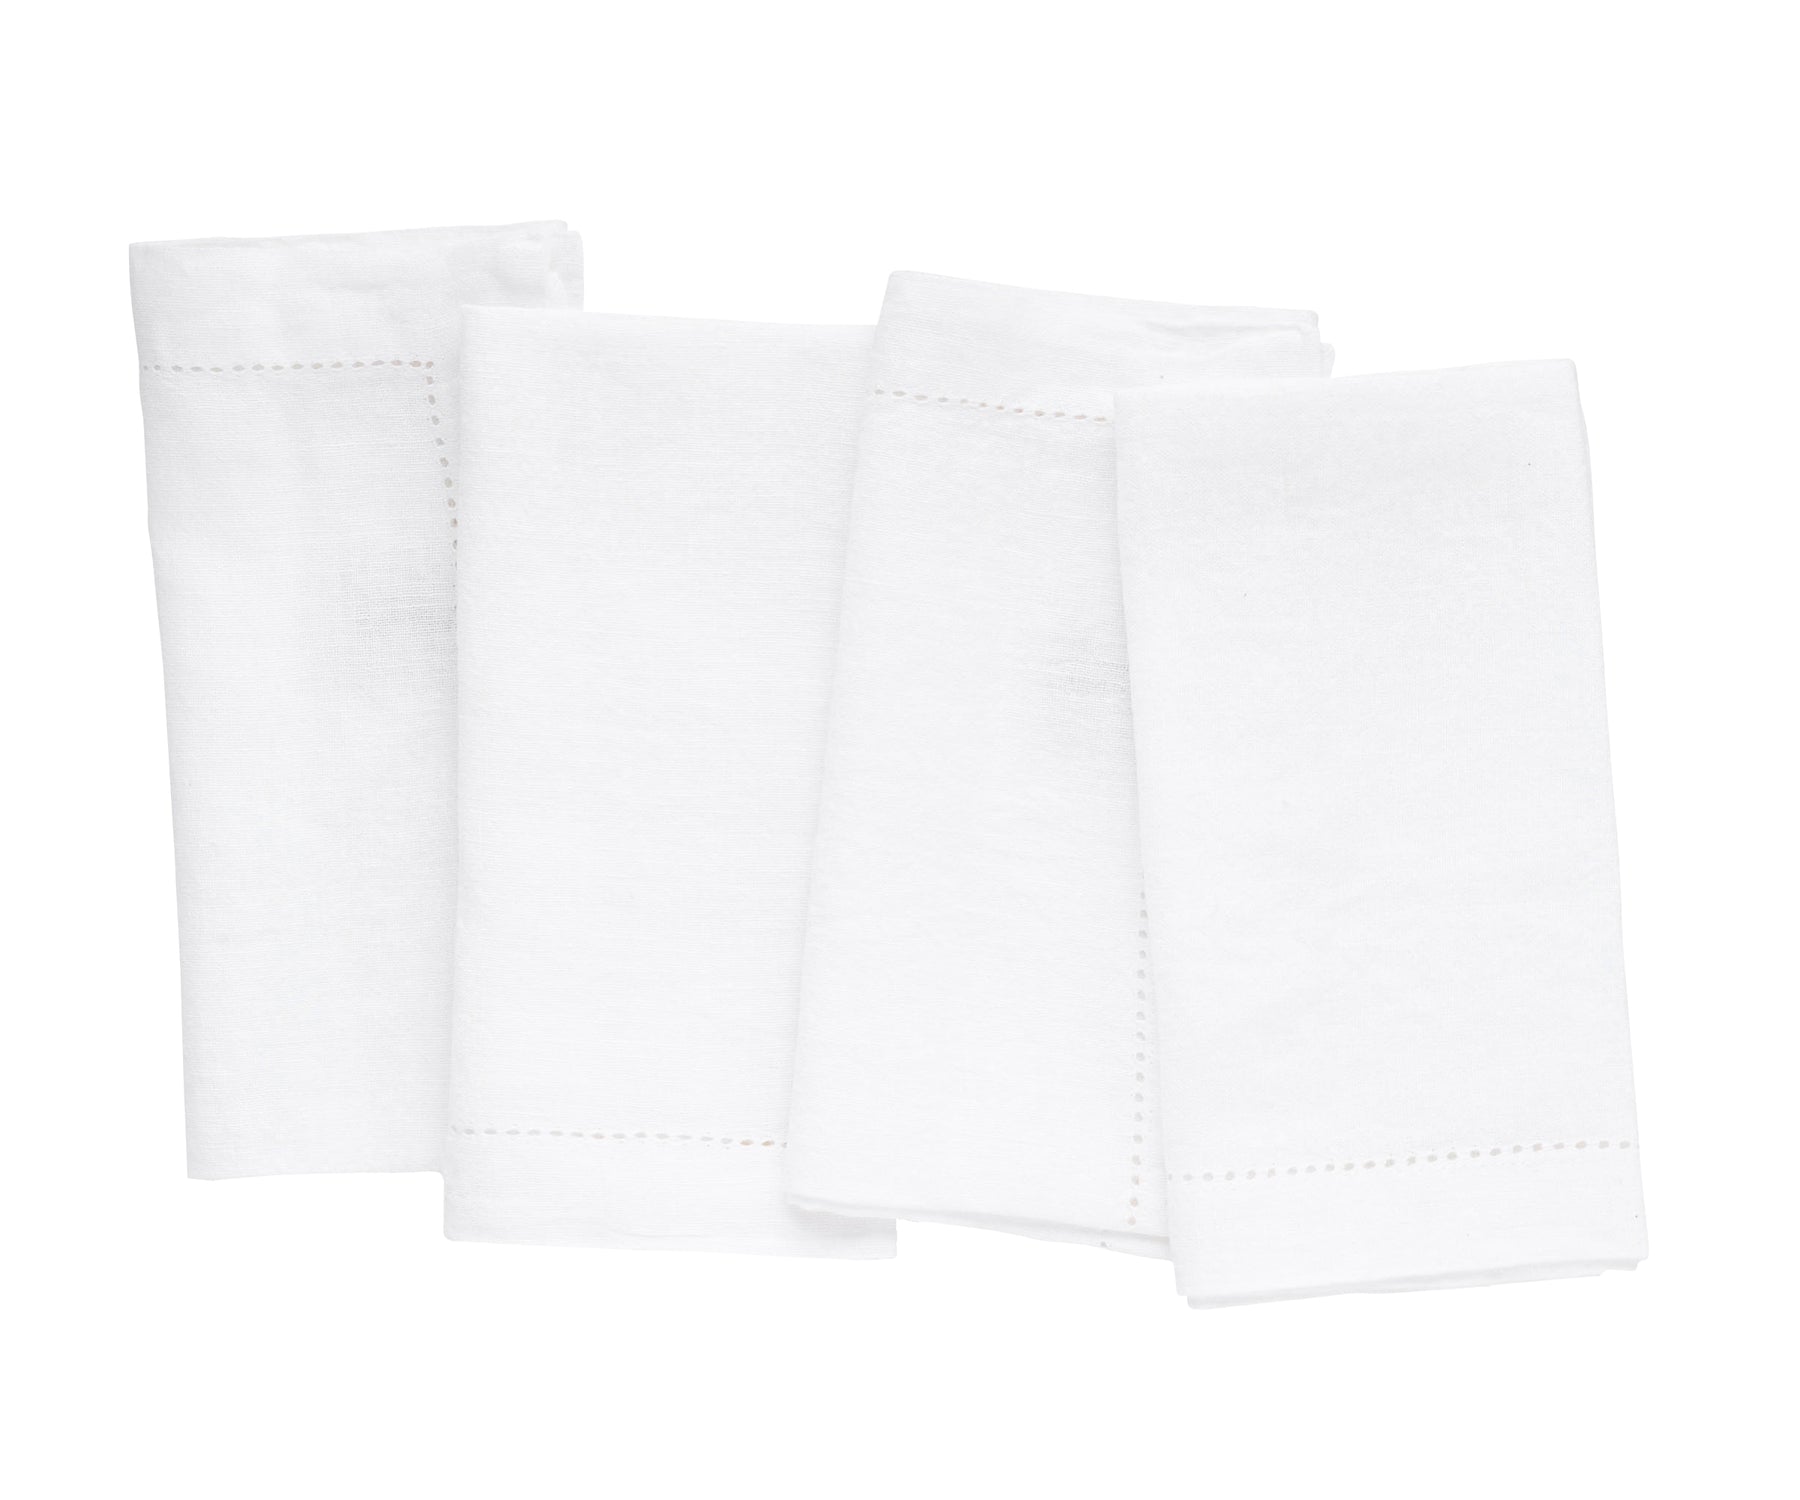 Collection of white linen napkins arranged on a pristine white backdrop